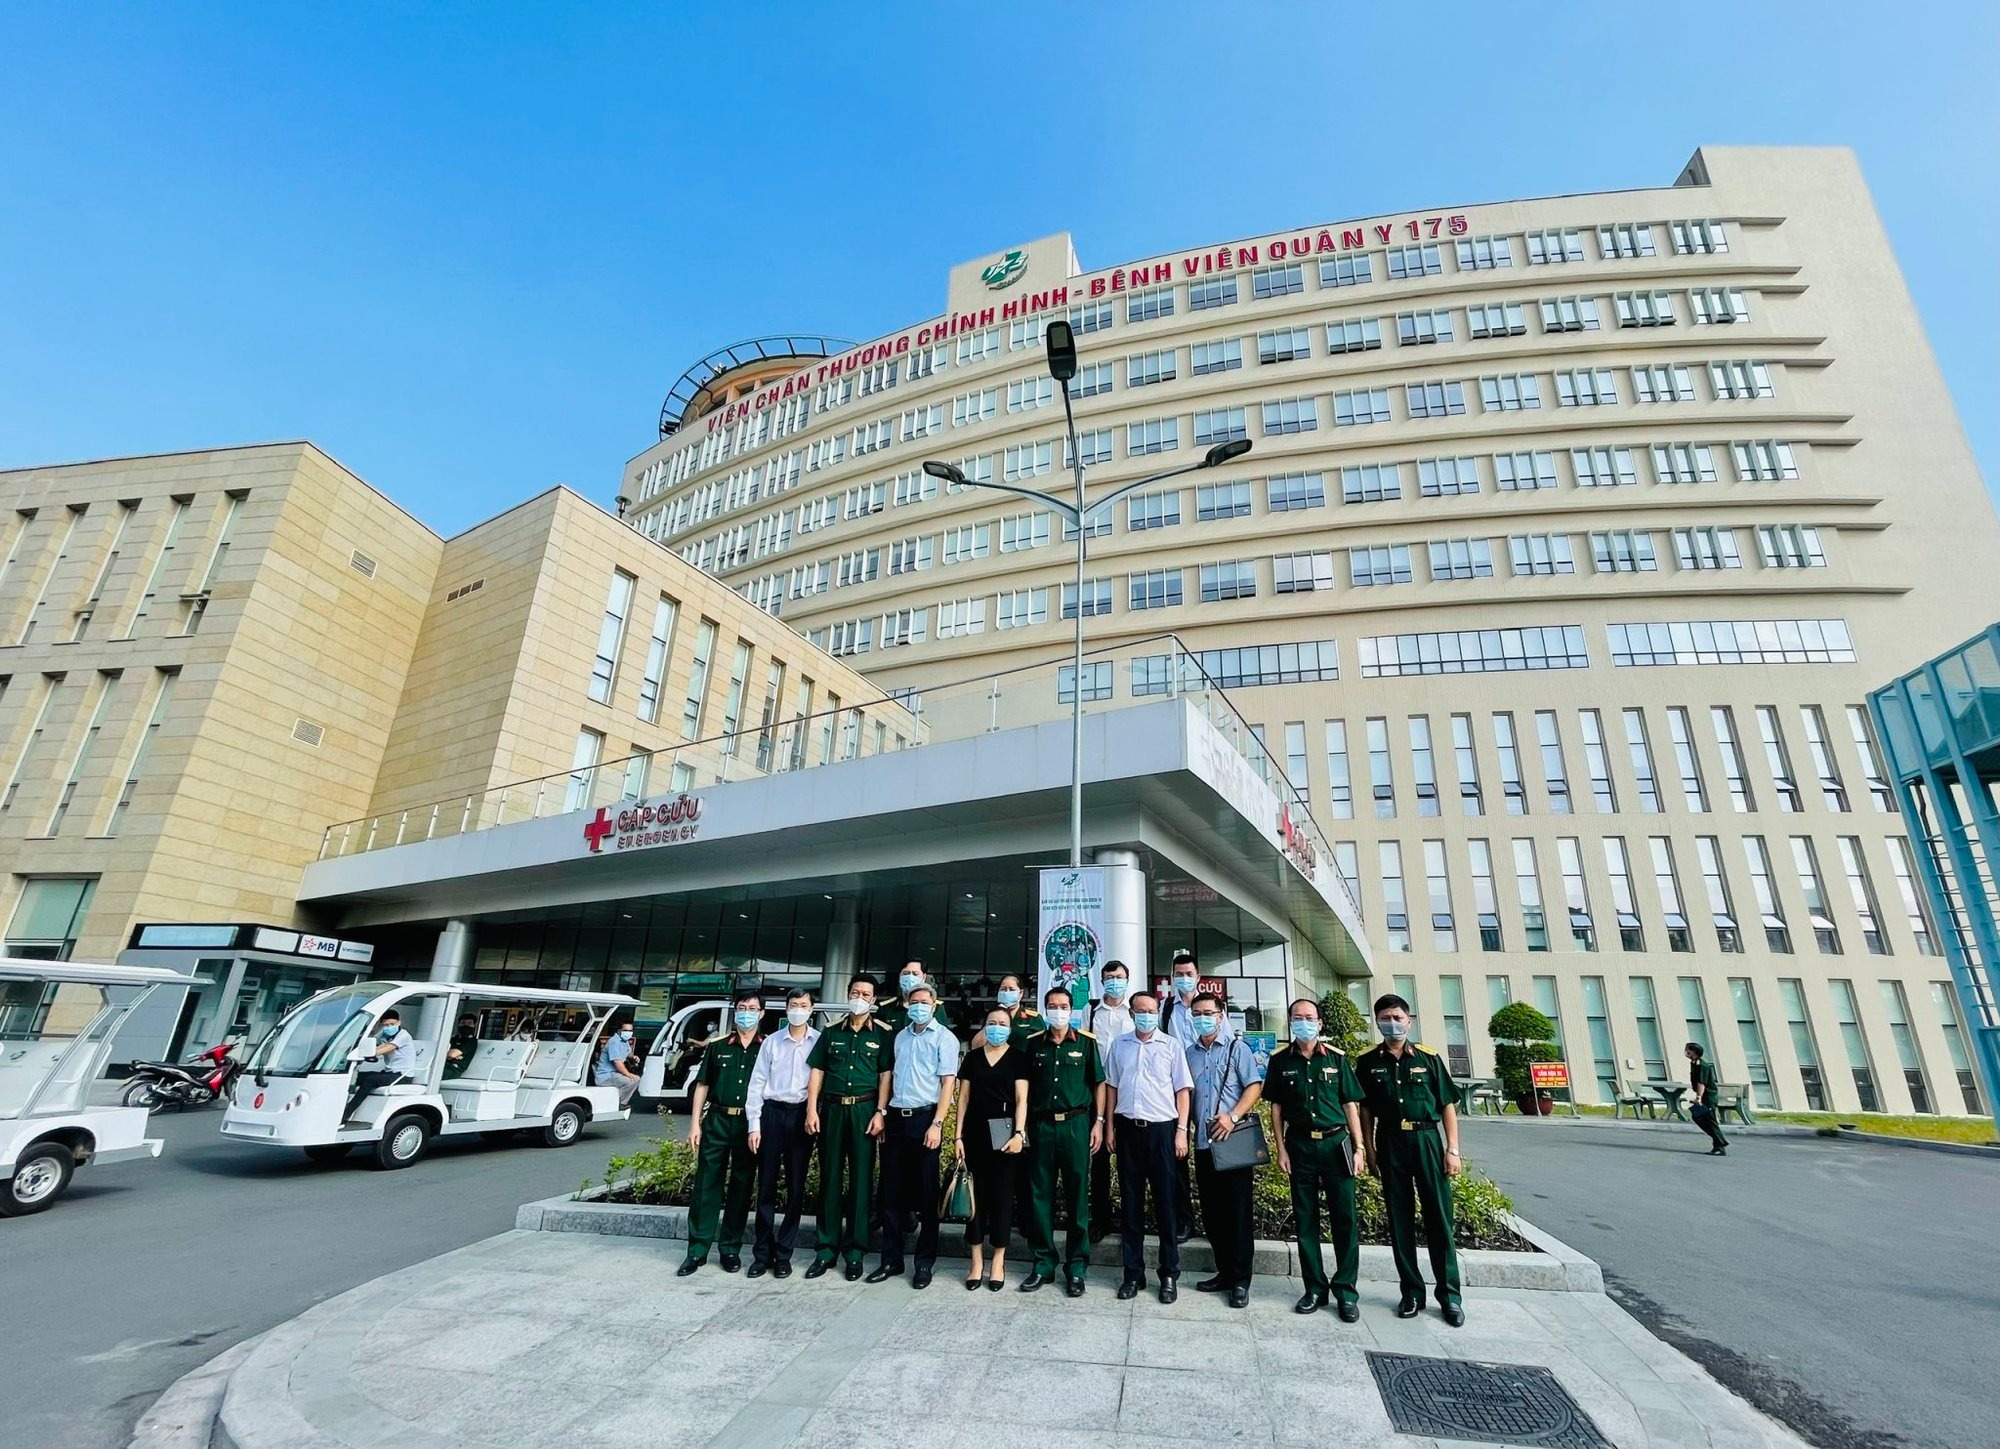 General Hospital in Saigon - 175 Military